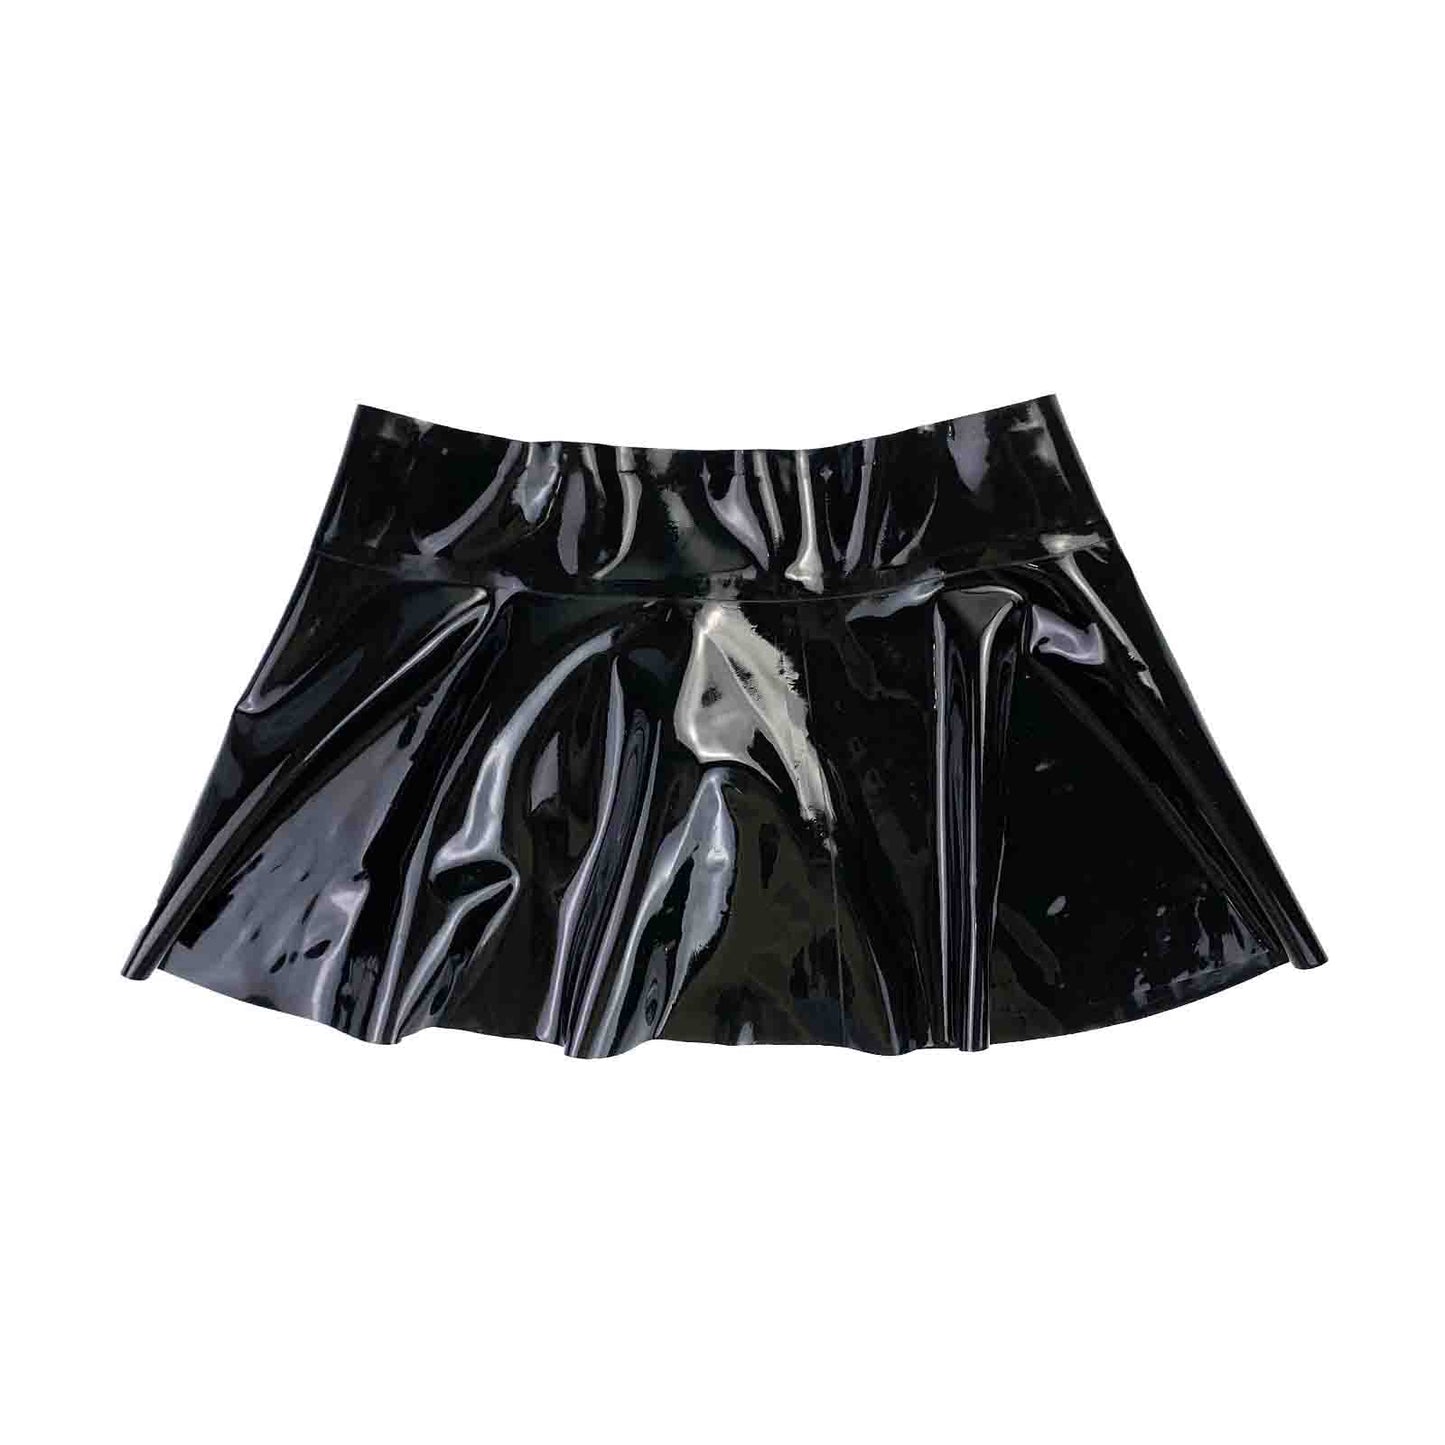 MONNIK Black Latex Fashion Skirt Ultra Short Skirt Sexy Women's Rubber Pleated Skirt for fetish Catsuit party club wear